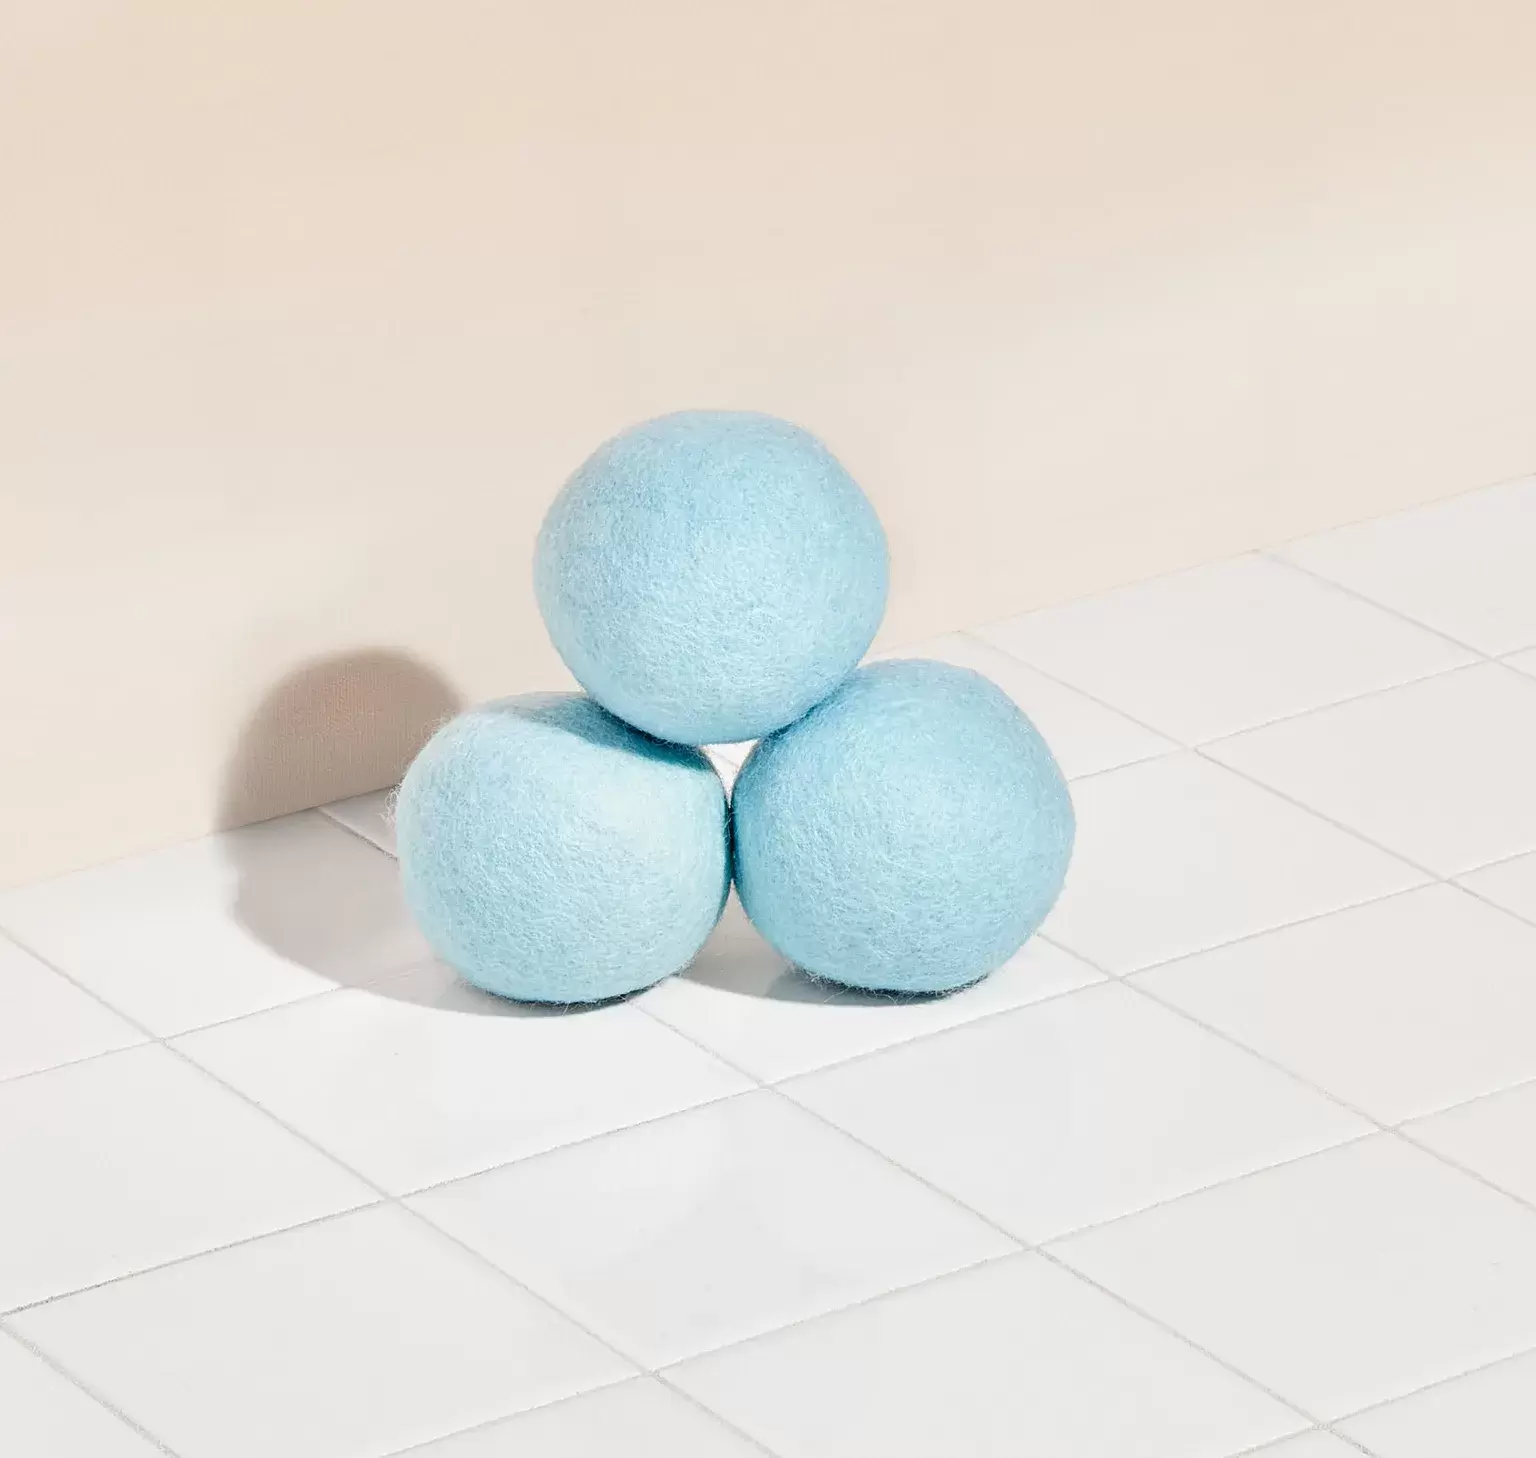 Blueland wool dryer balls